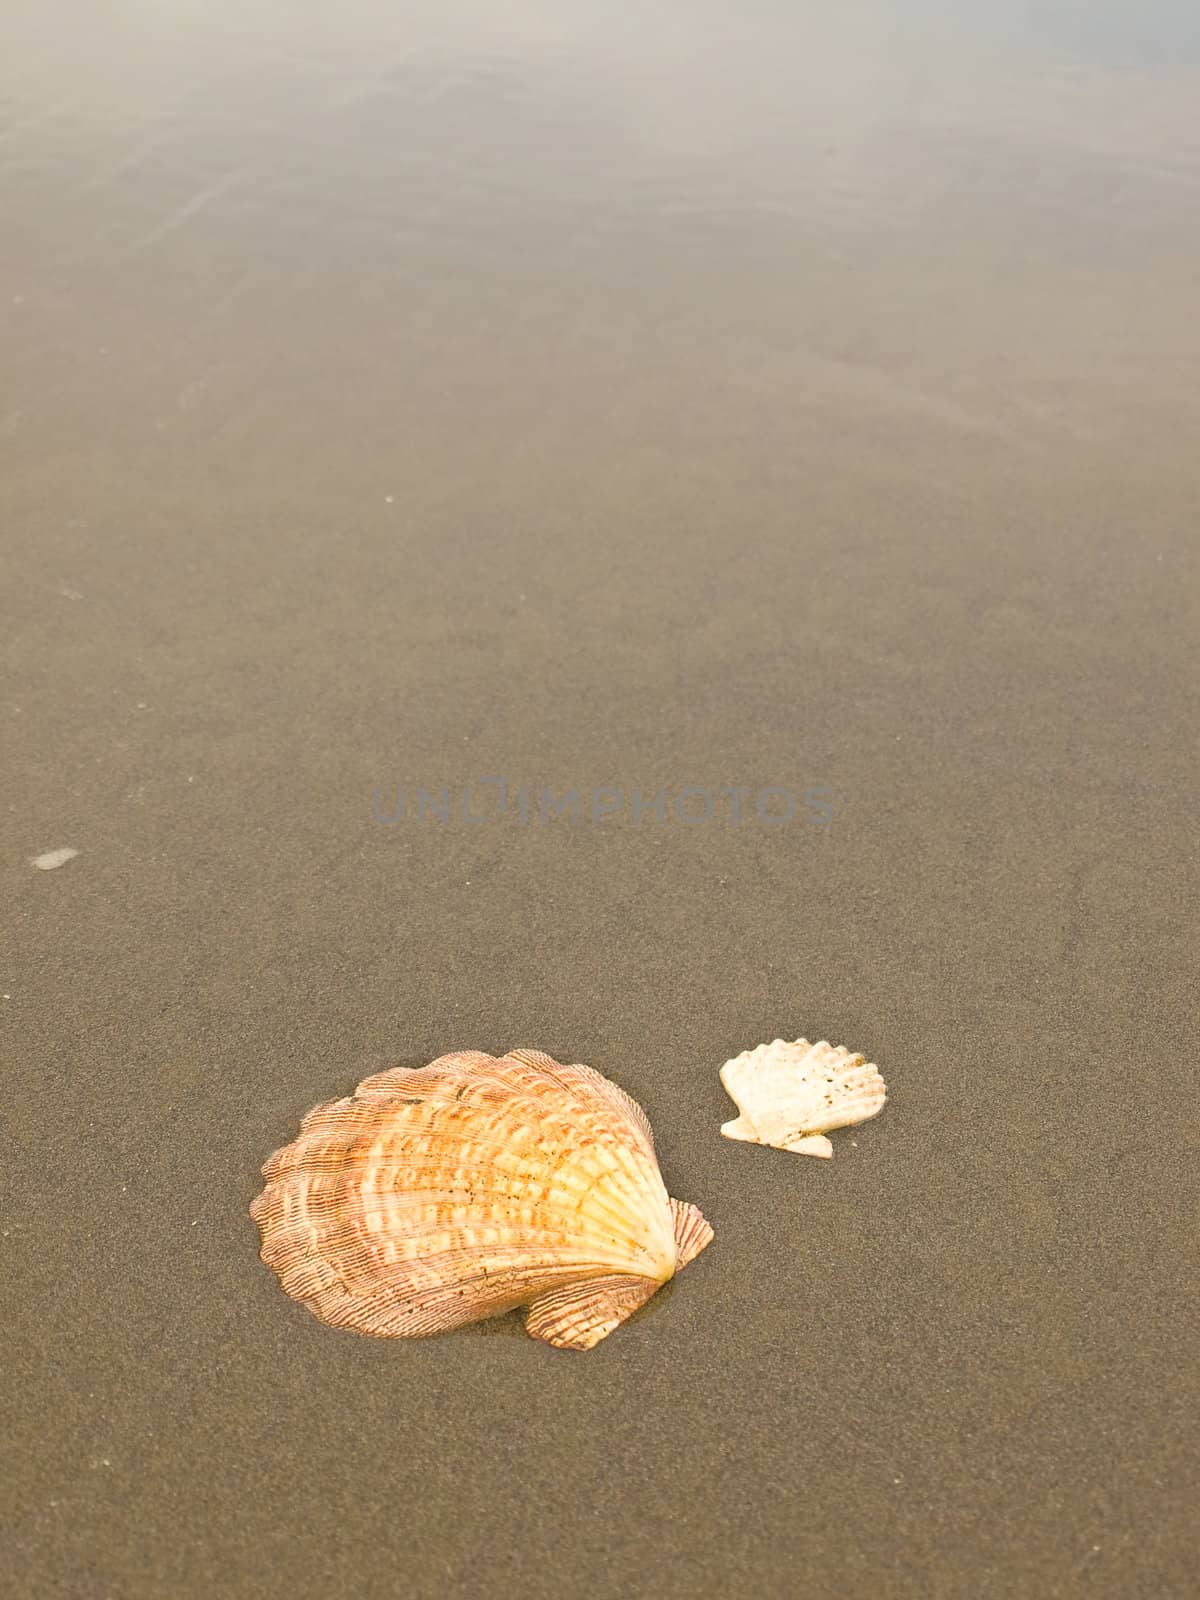 Scallop Shells on a Wet Sandy Beach by Frankljunior